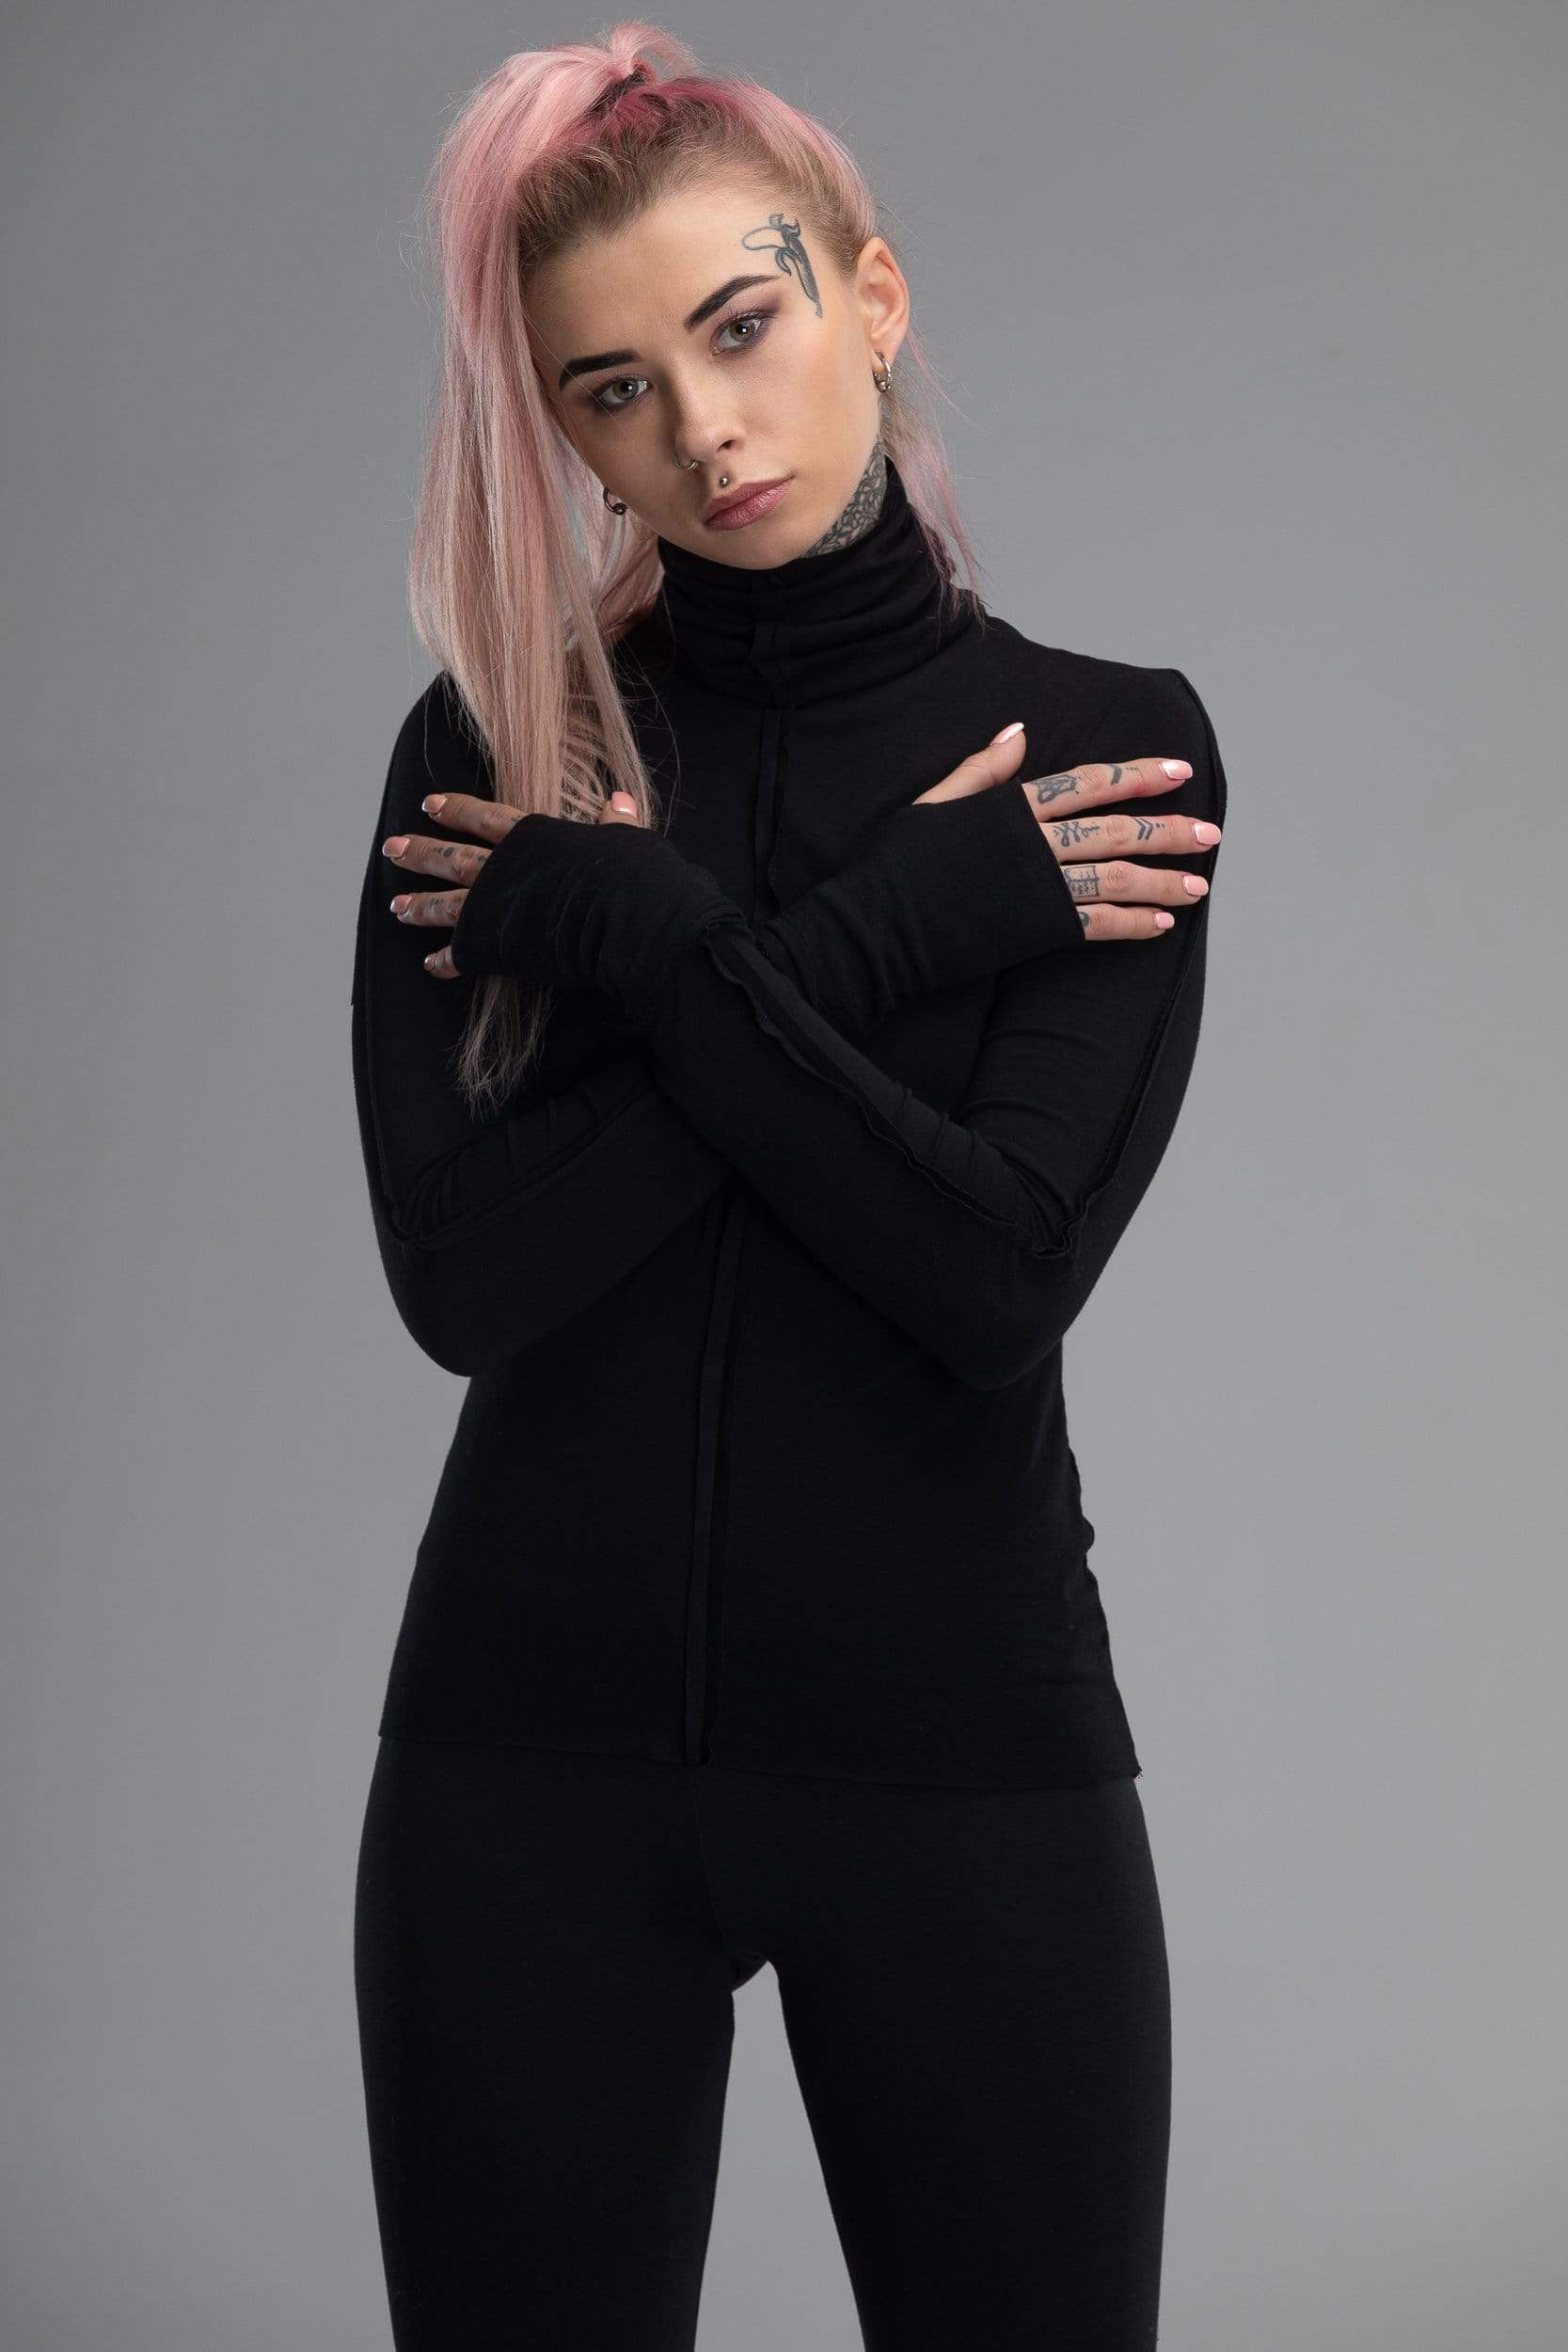 MDNT45 Sweaters, Tunics & Tops Black turtleneck top